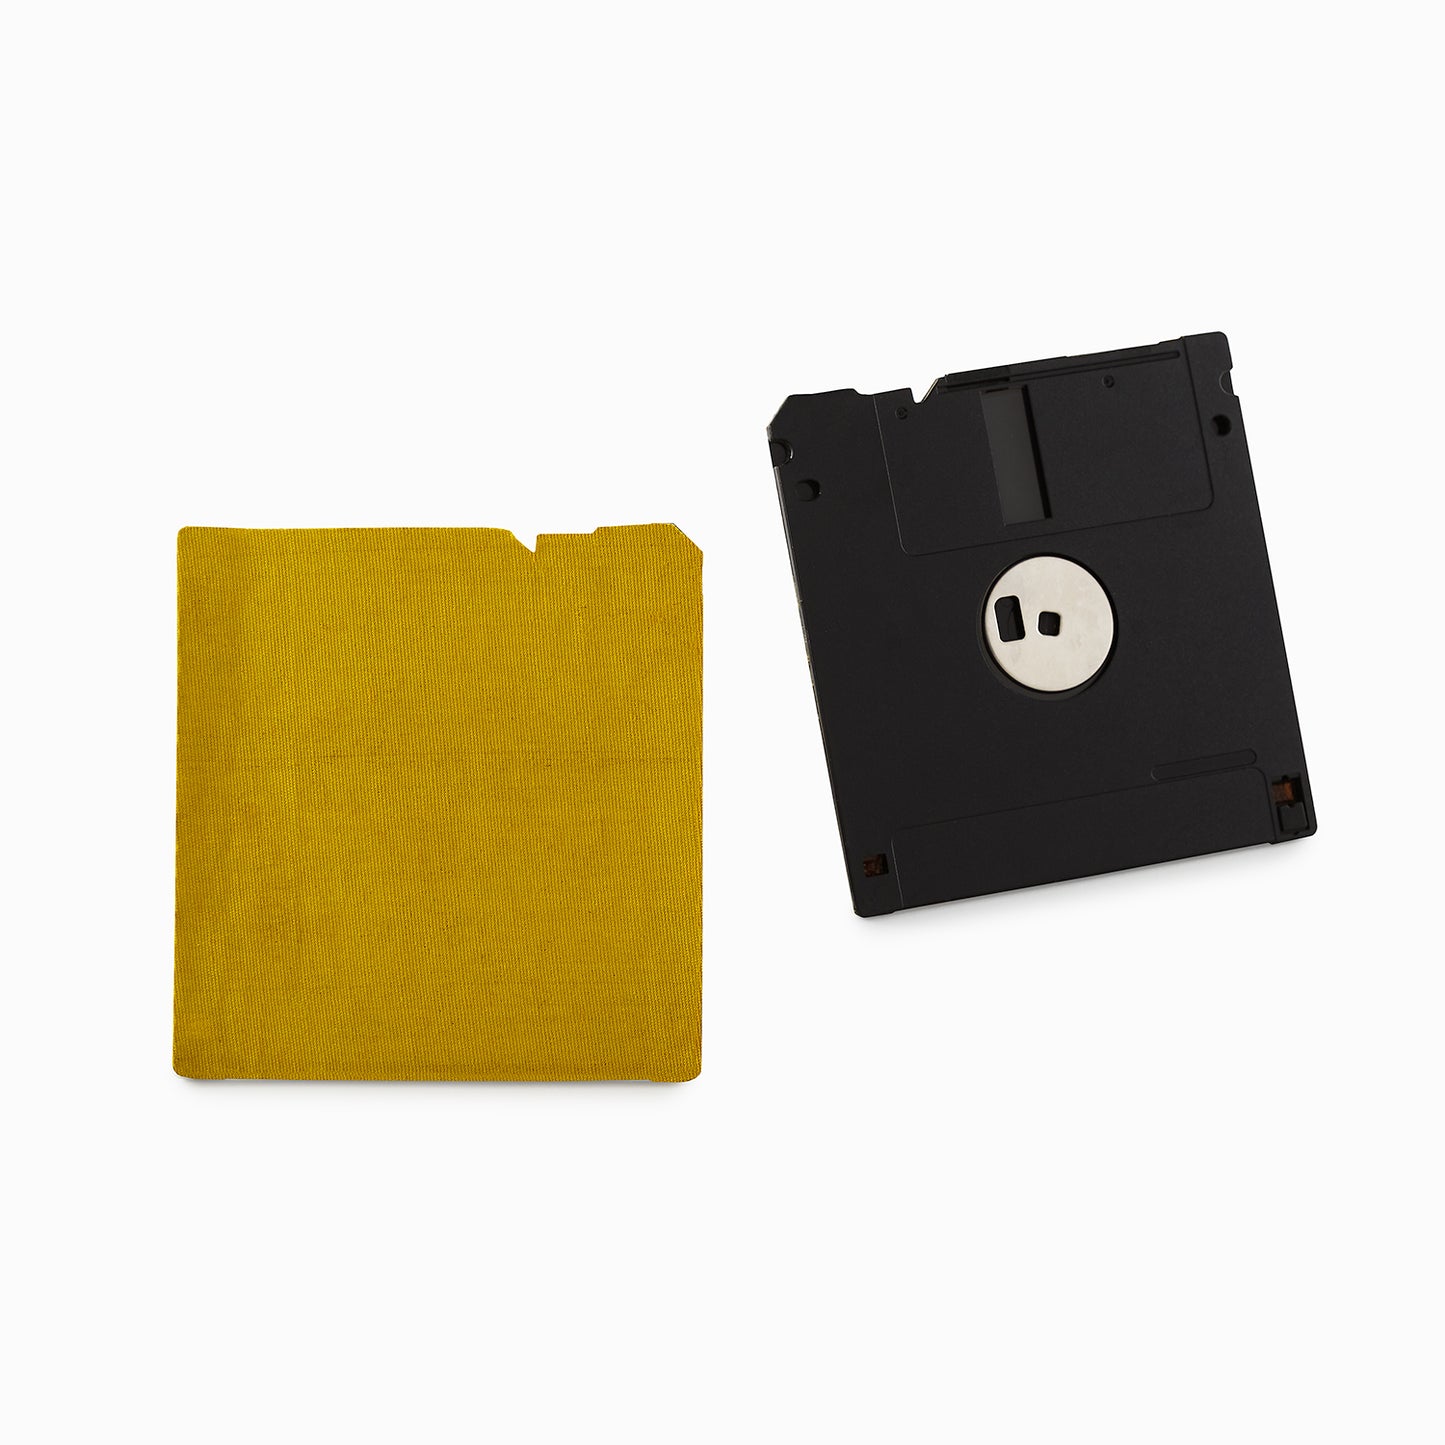 Citrine Green - Floppy Disk Coaster Set of 2